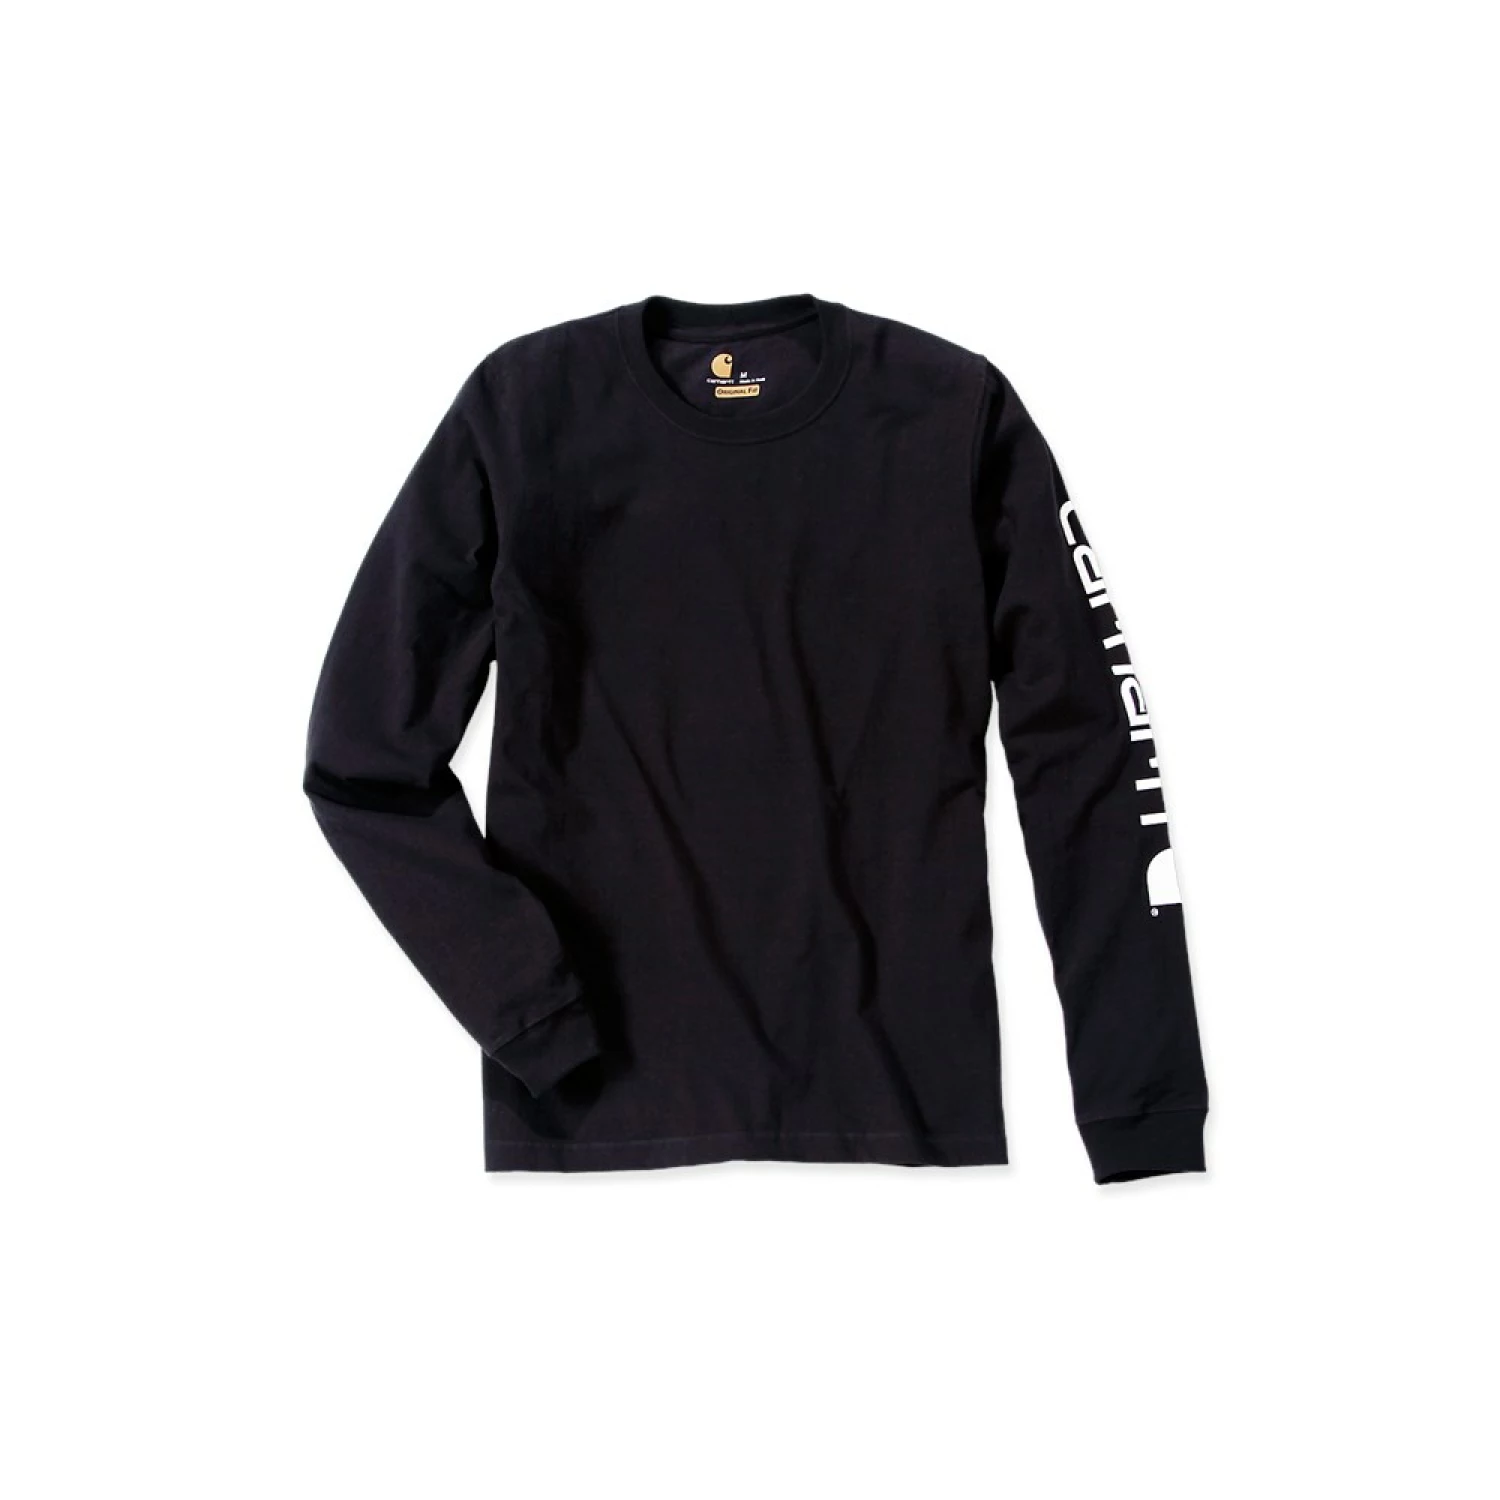 Carhartt EK231 Signature Sleeve Logo Longsleeve T-Shirt - Relaxed Fit - Black - XXL